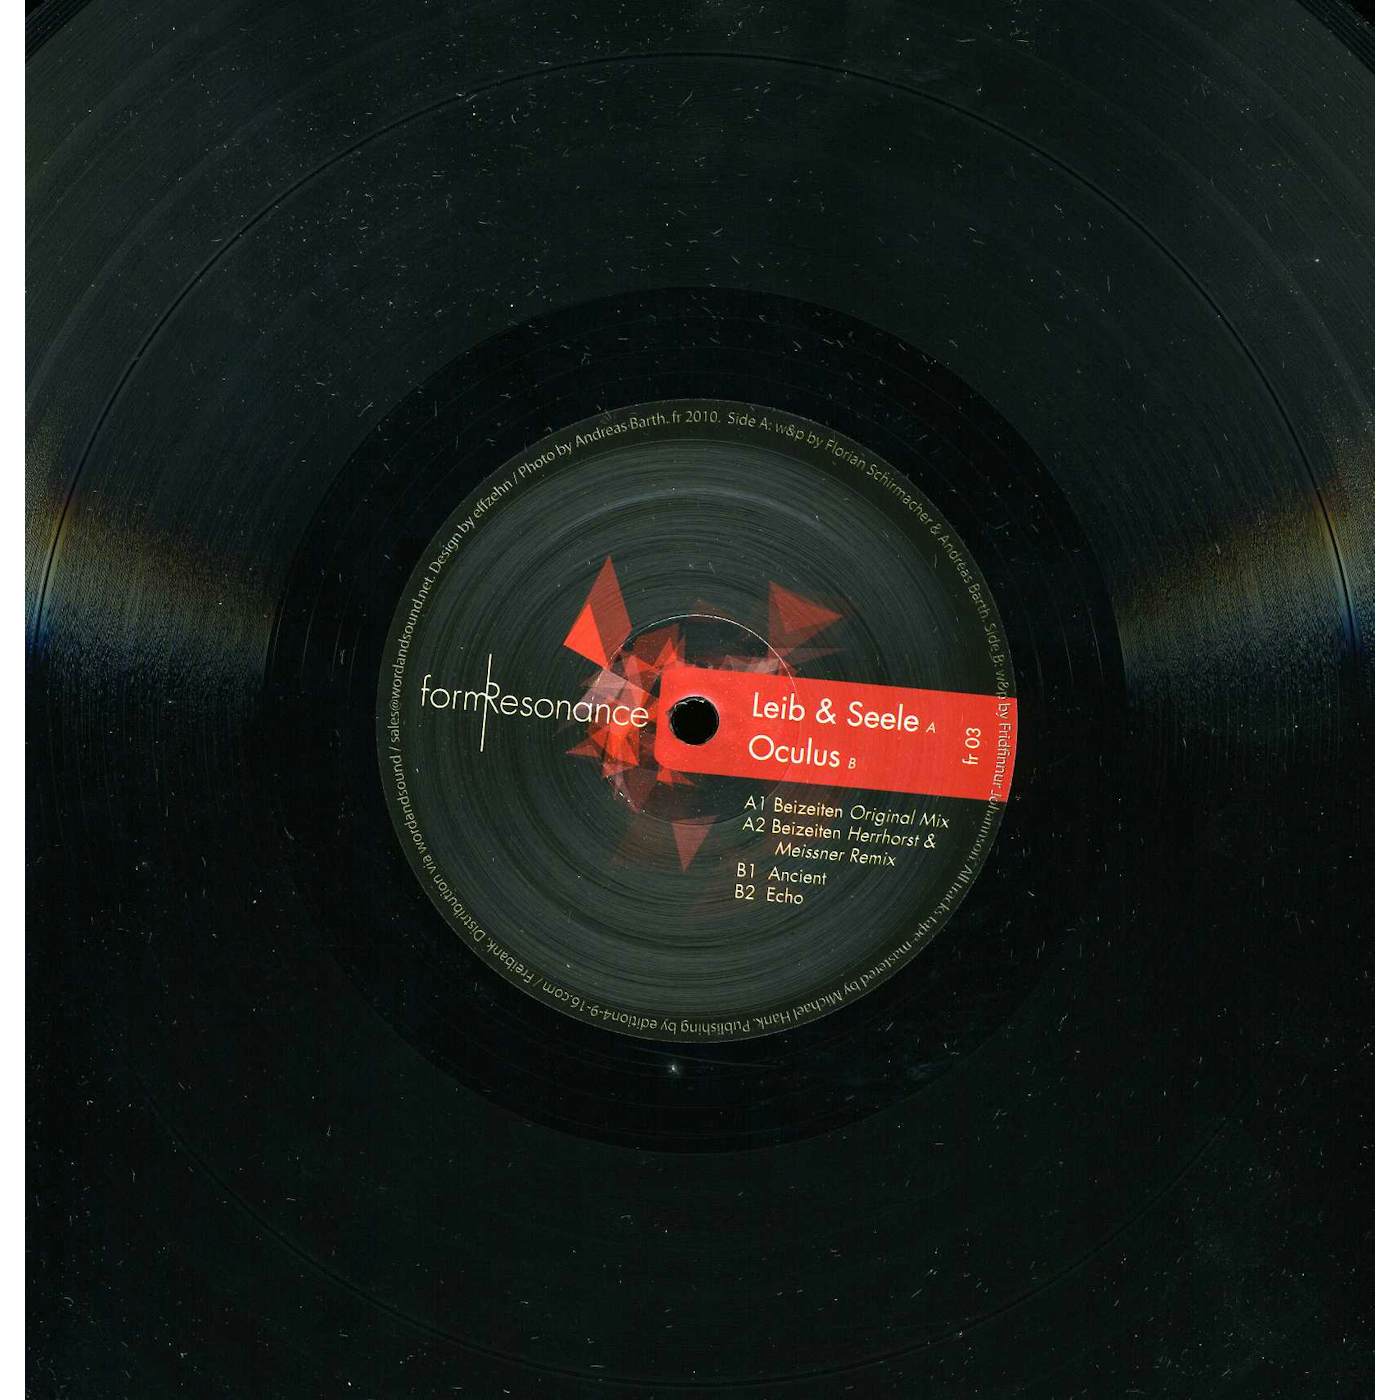 LEIB & SEELE & OCULUS Vinyl Record